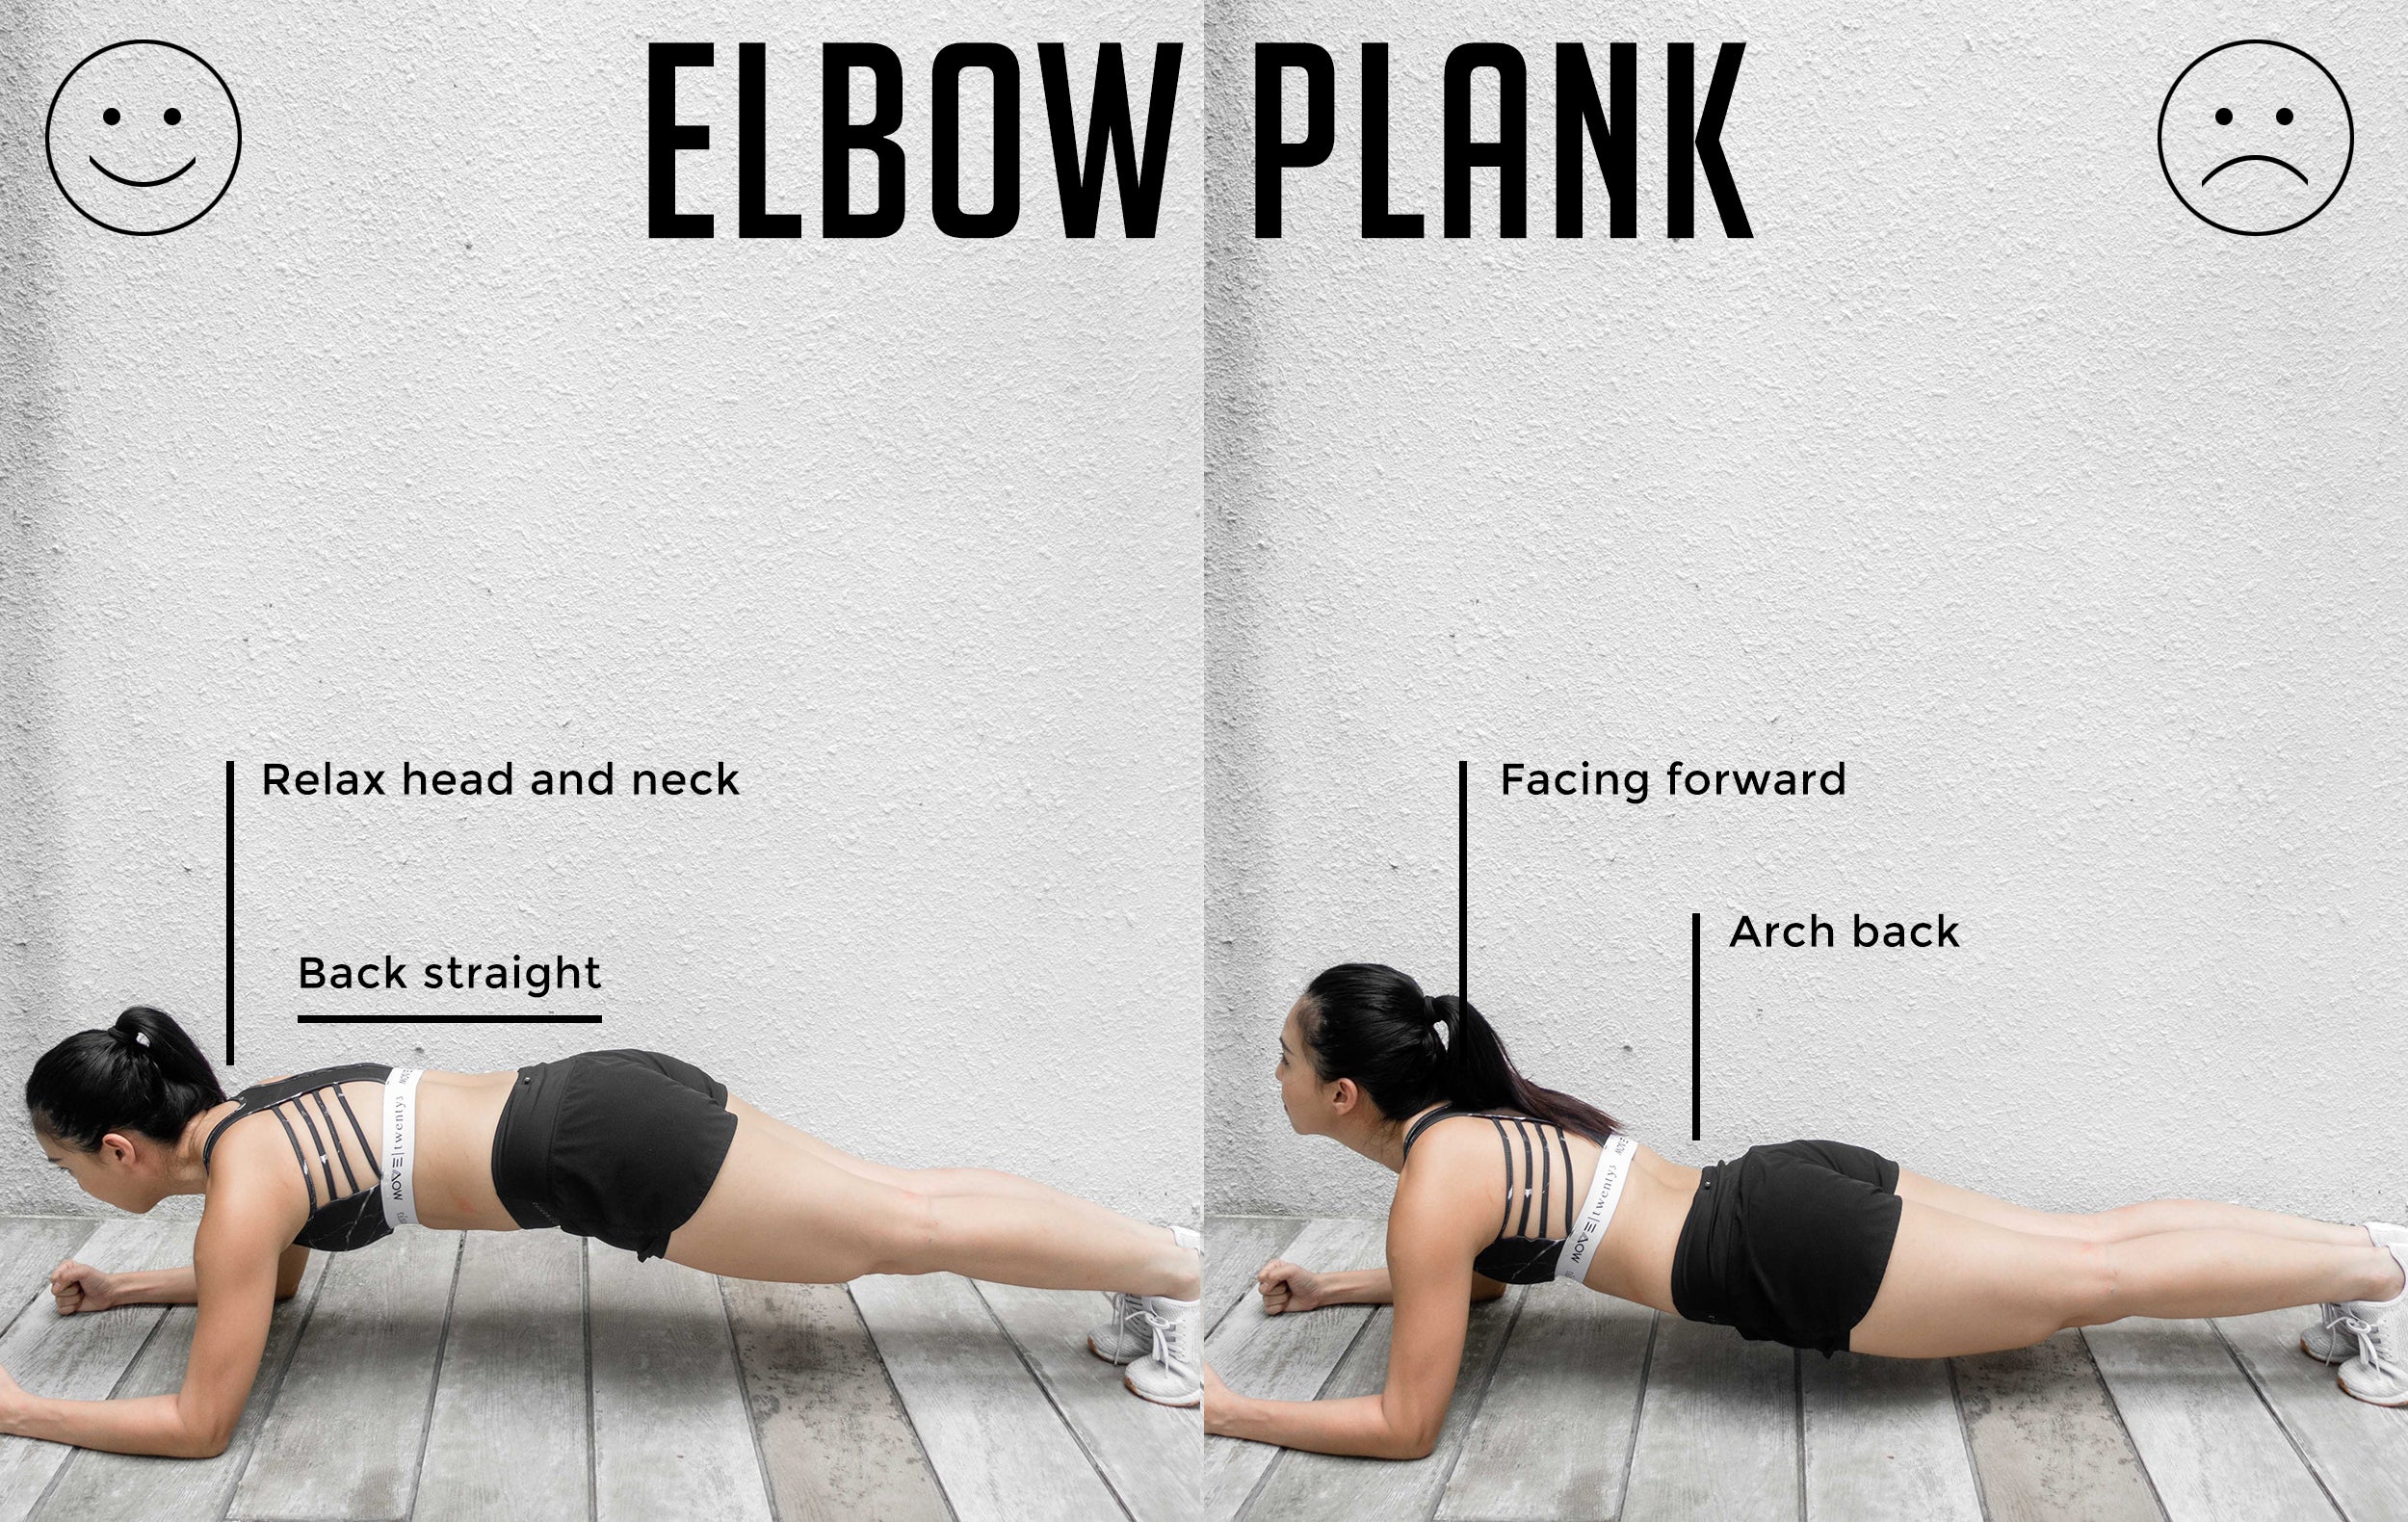 Elbow Plank Good Versus Bad Form